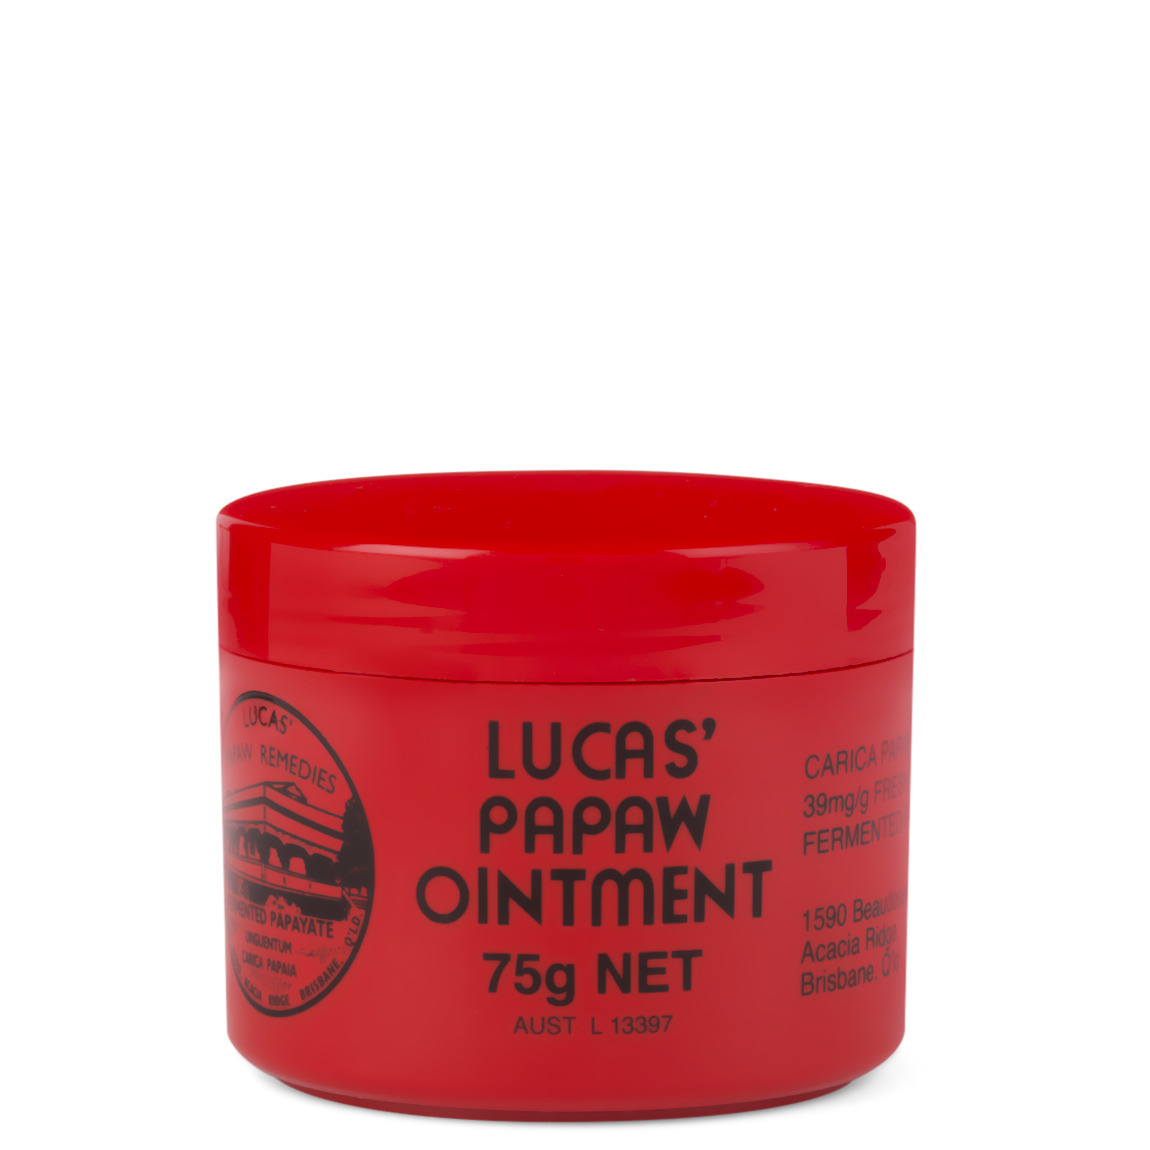 Lucas' Papaw Remedies Lucas' Papaw Ointment Review